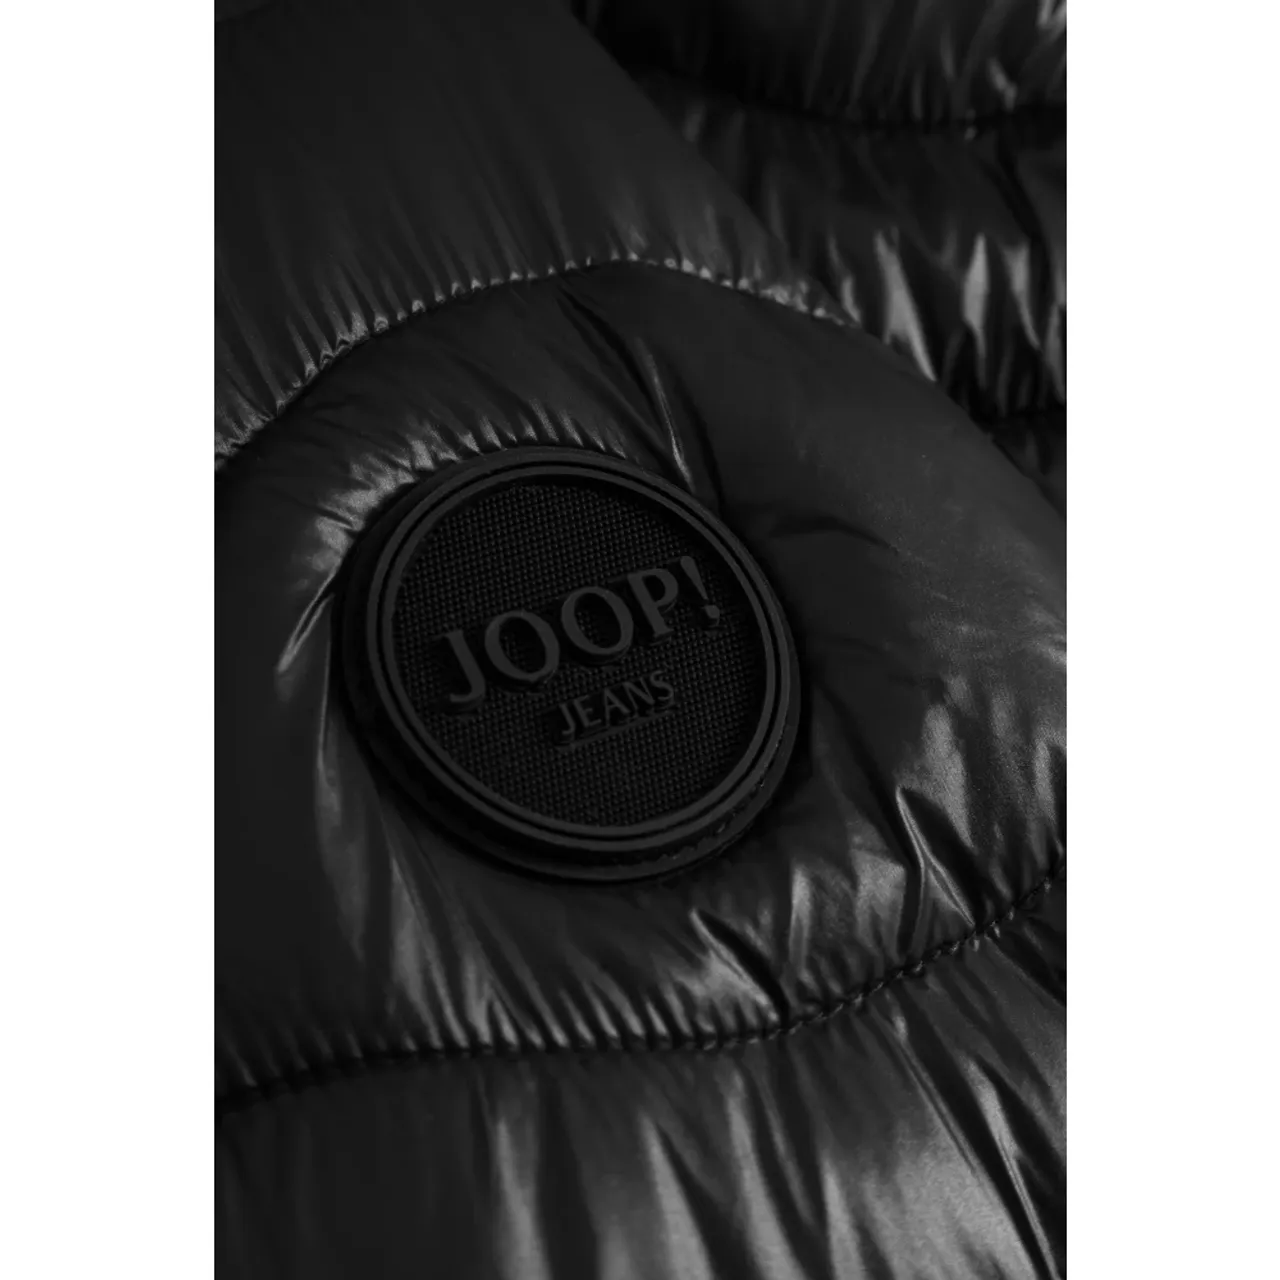 Joop! Joop Jeans Steppjacke JJO-232Abano mit Kapuze - Preise vergleichen